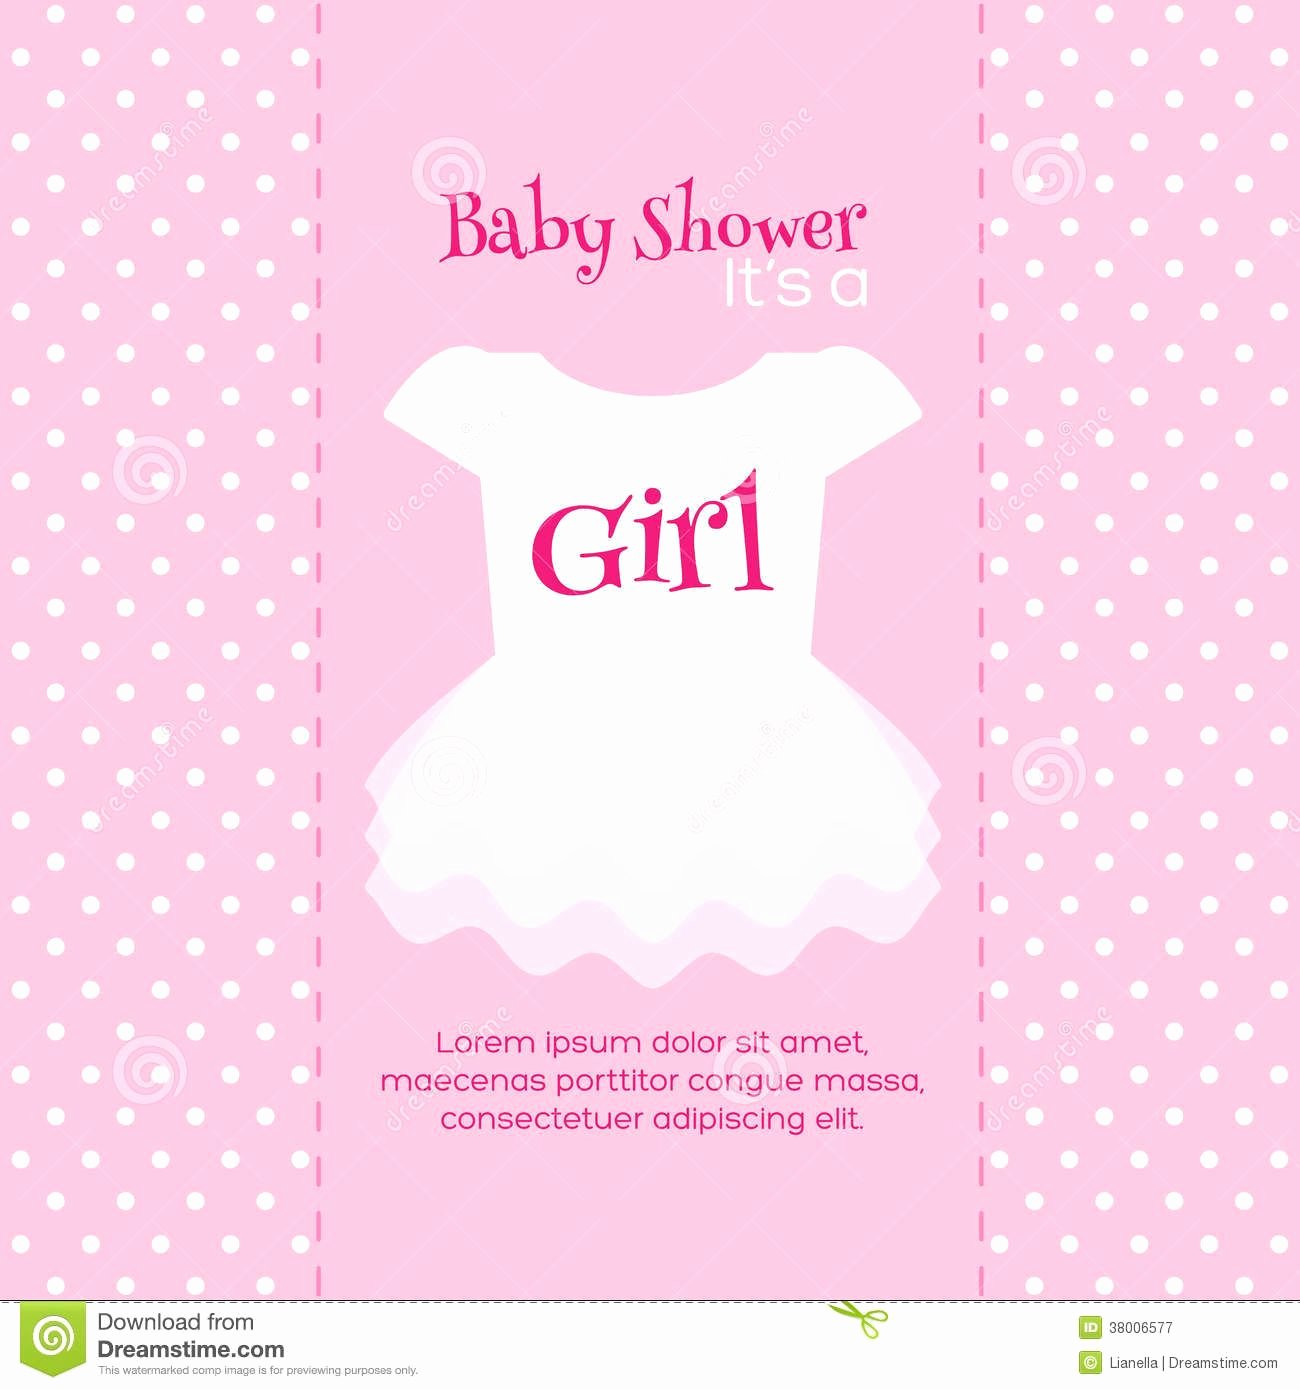 Design Free Printable Baby Shower Invitations for Girls